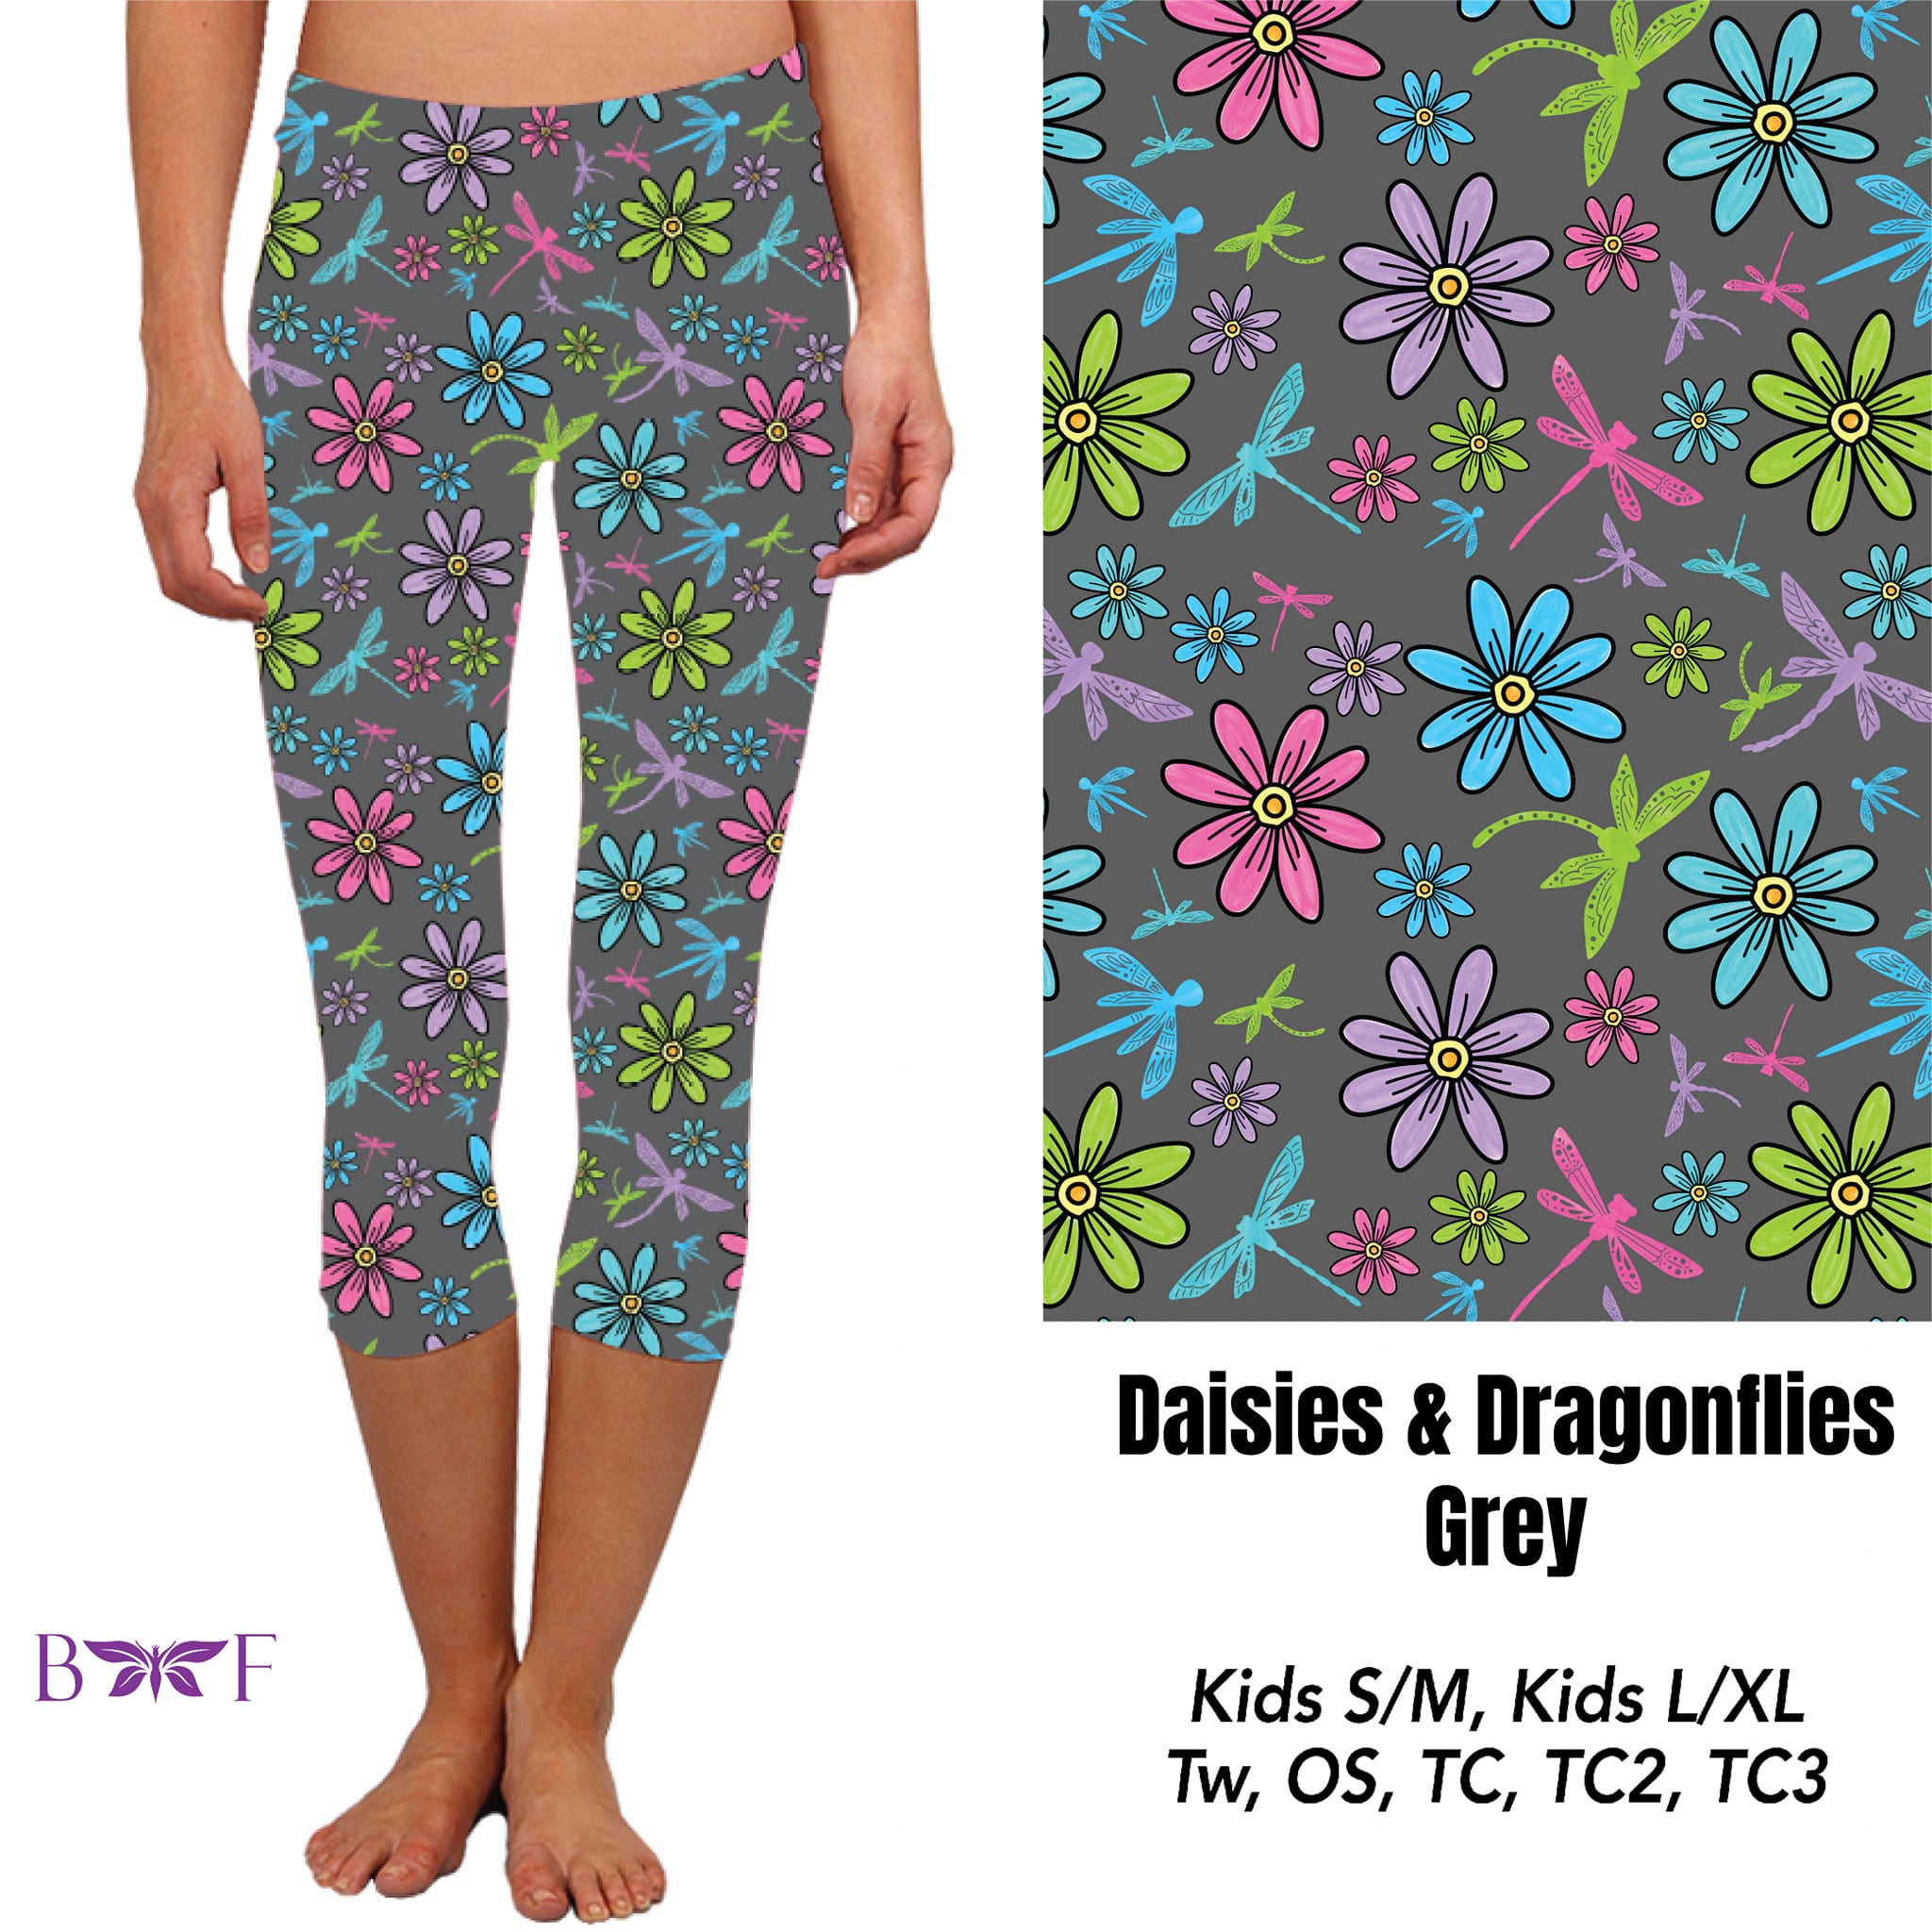 Daisies & Dragonflies Grey Capris and shorts